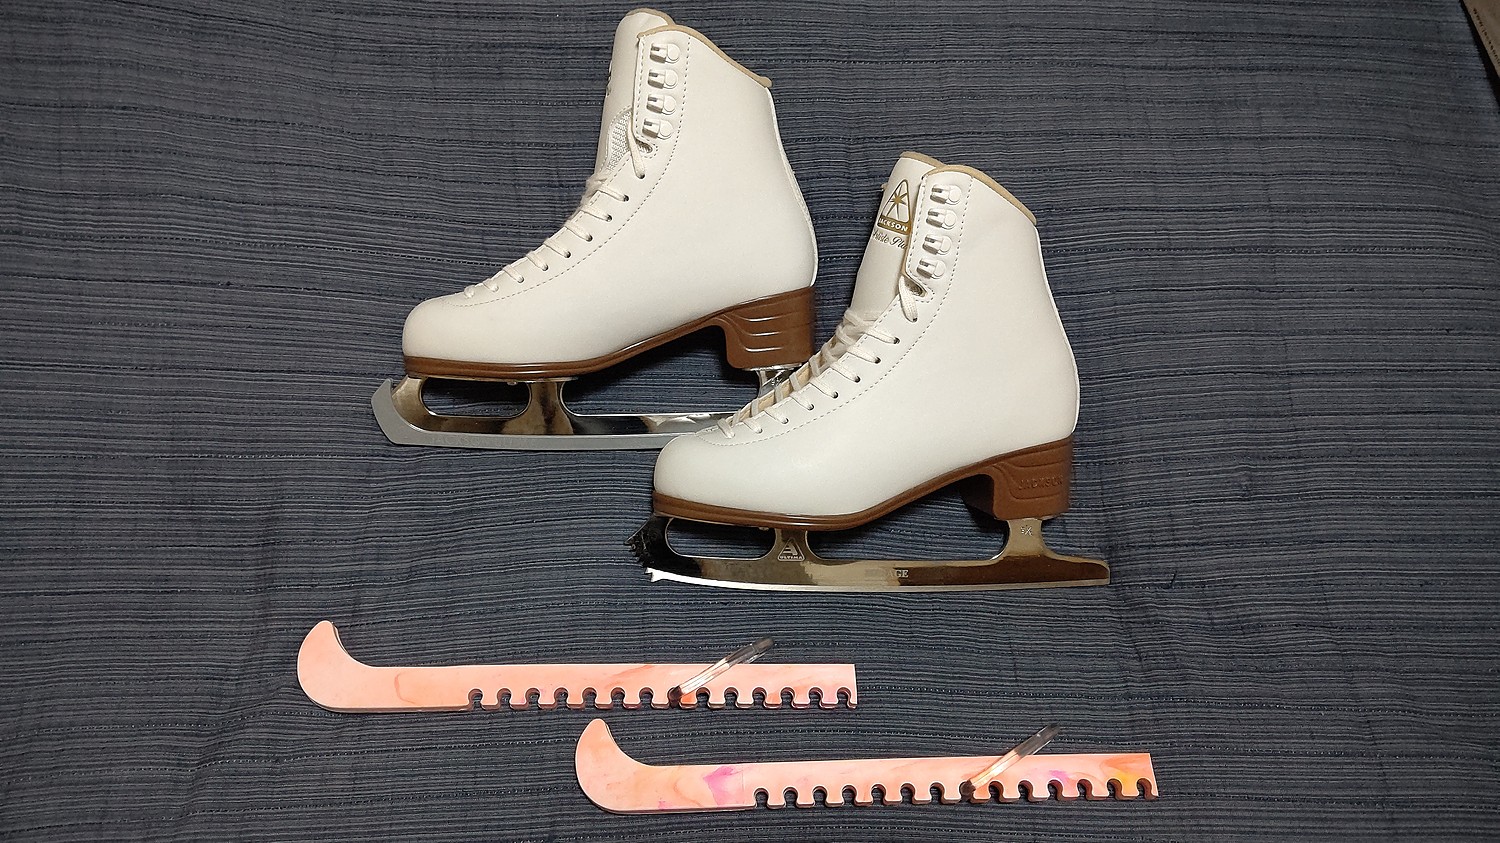 Jackson Ultima フュージョン Elle and Freestyle フィギュア アイススケート靴 レディース メンズ ガールズ ボーイズ  JUST LAUNCHED 2019 通販